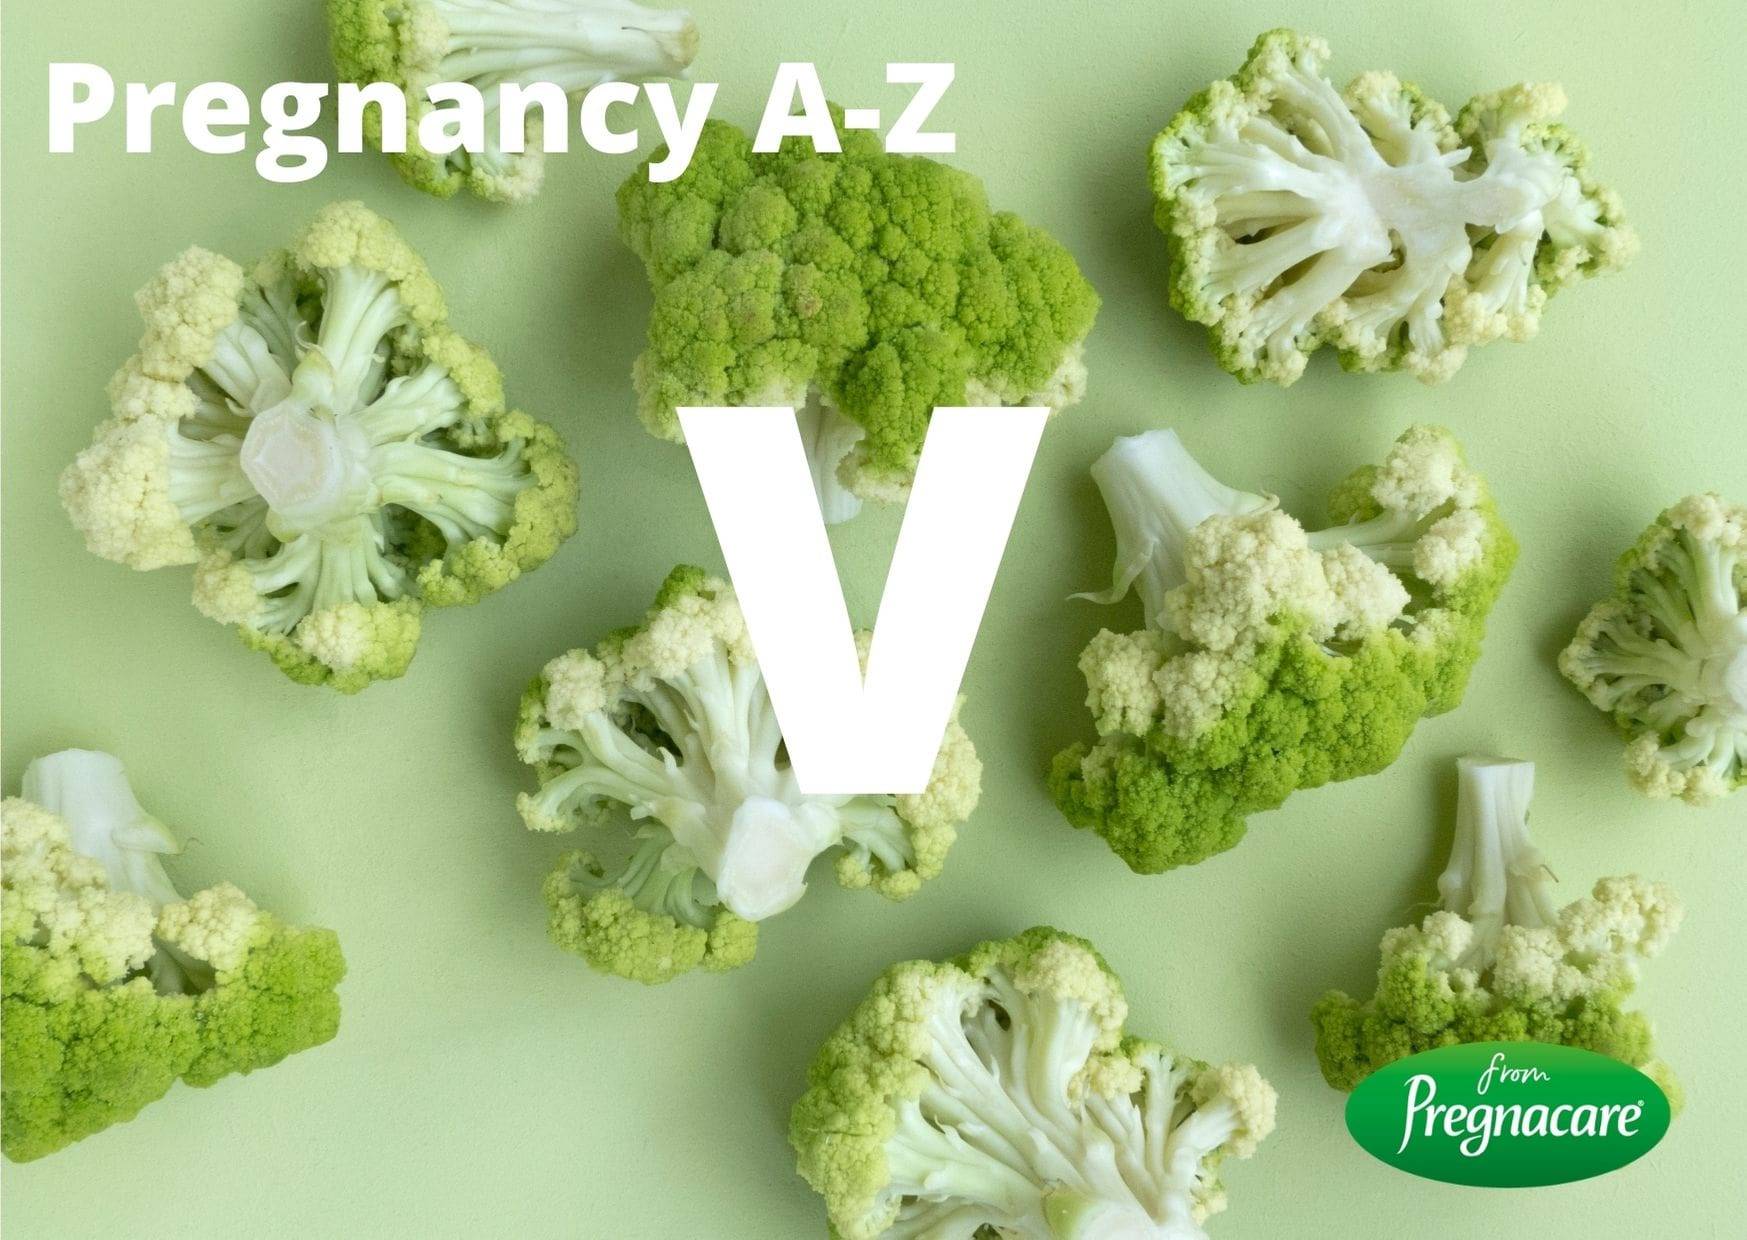 Pregnacare A-Z guide to pregnancy and birth - the letter V